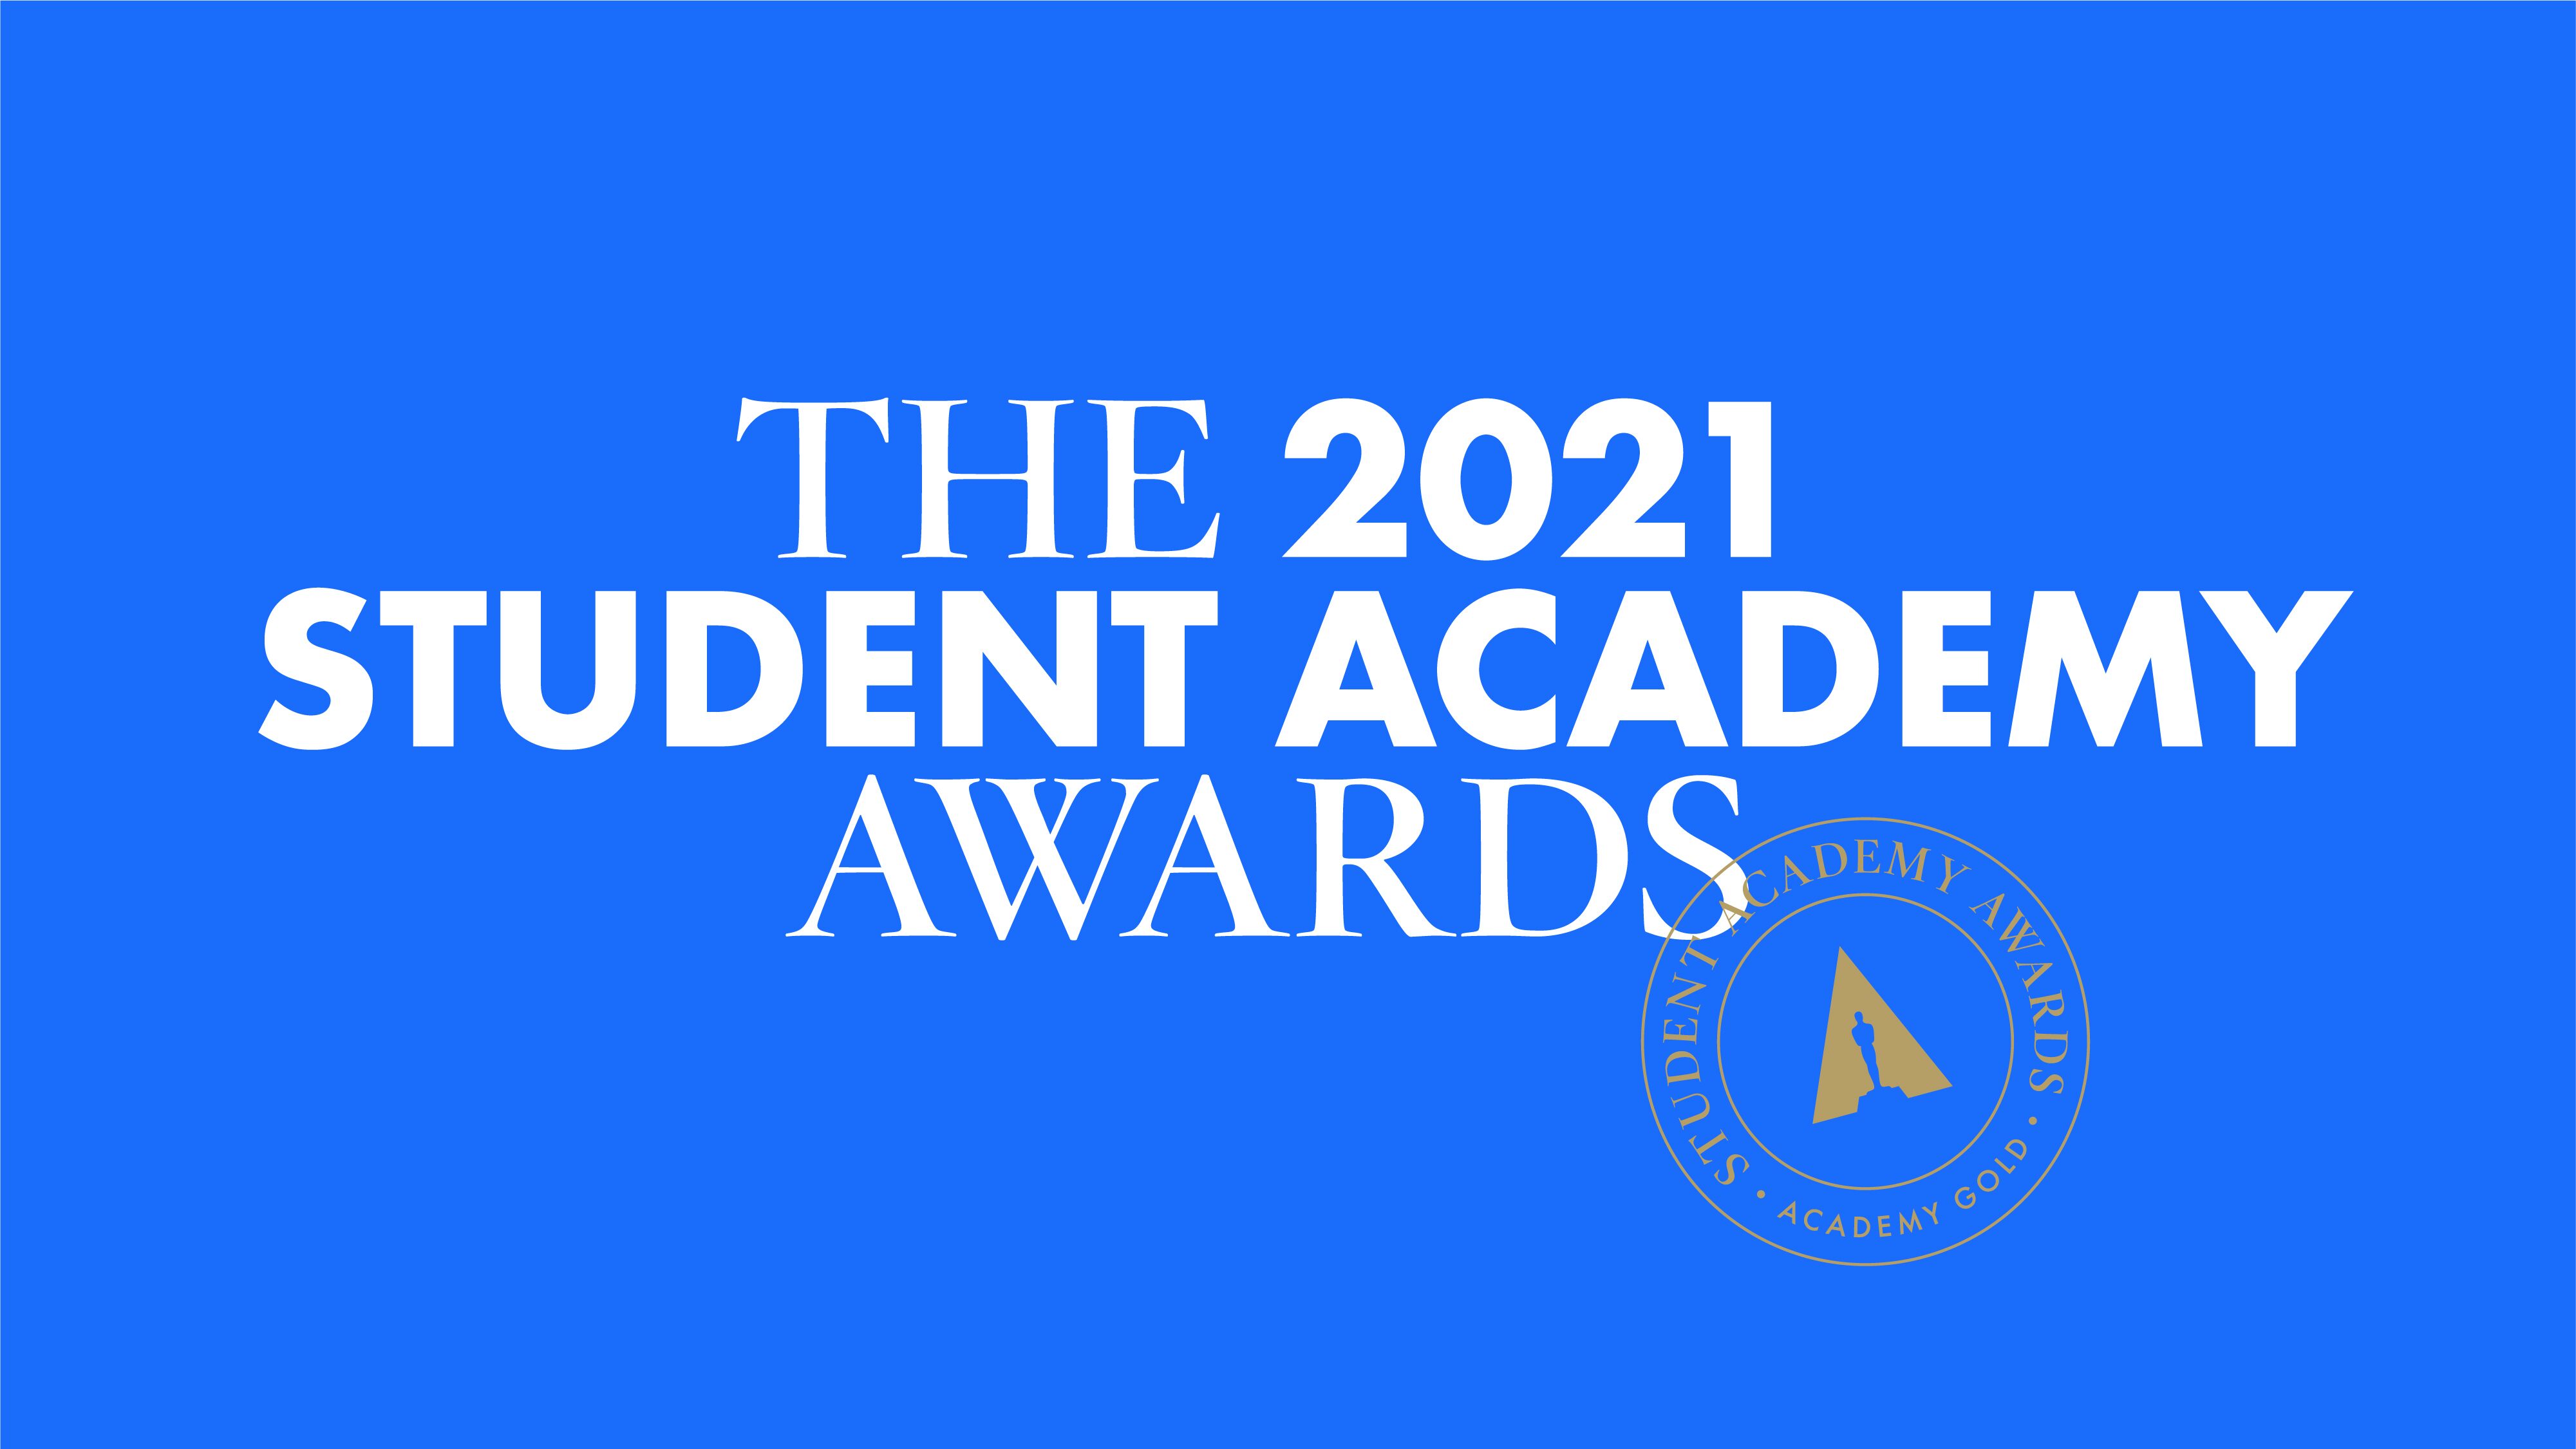 Meet the 2021 Student Academy Awards Finalists